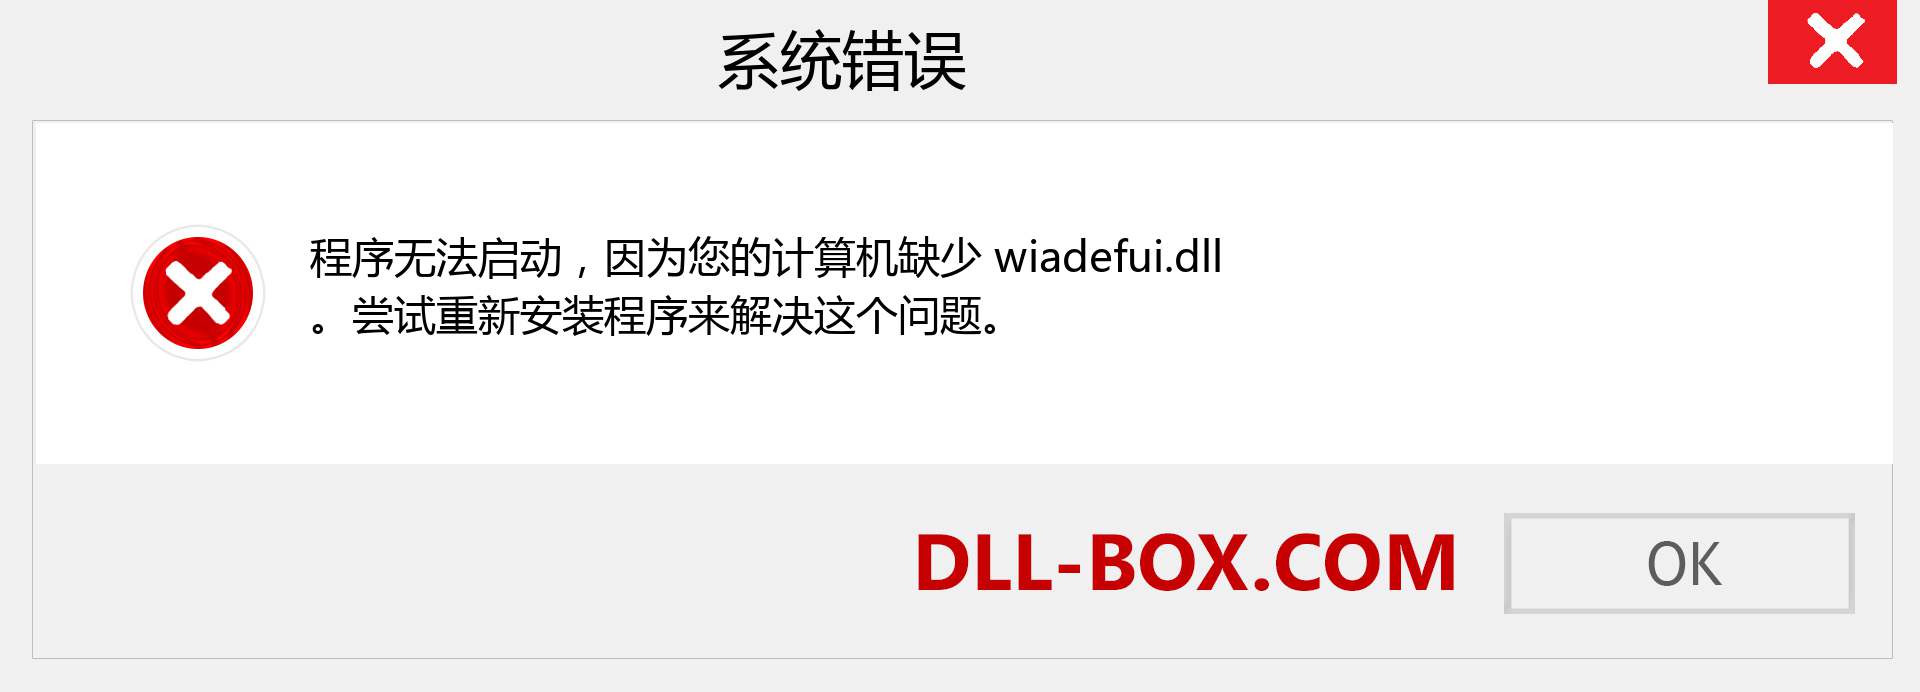 wiadefui.dll 文件丢失？。 适用于 Windows 7、8、10 的下载 - 修复 Windows、照片、图像上的 wiadefui dll 丢失错误